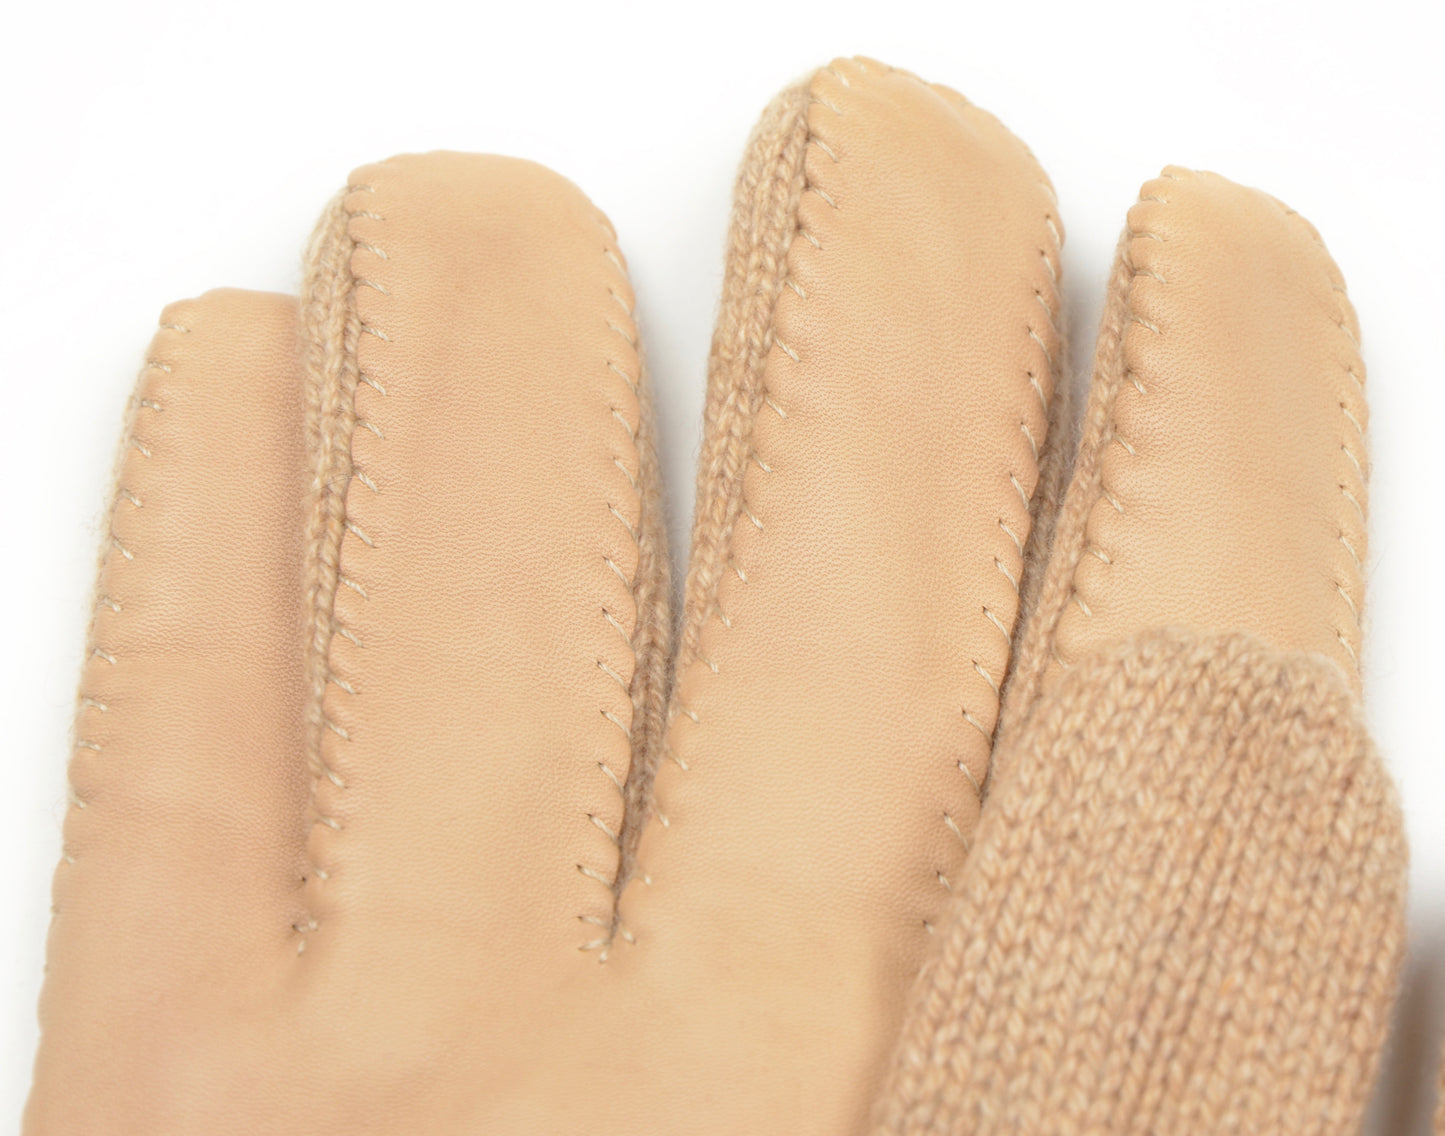 Cashmere Knit Gloves Size L - Oatmeal & Beige